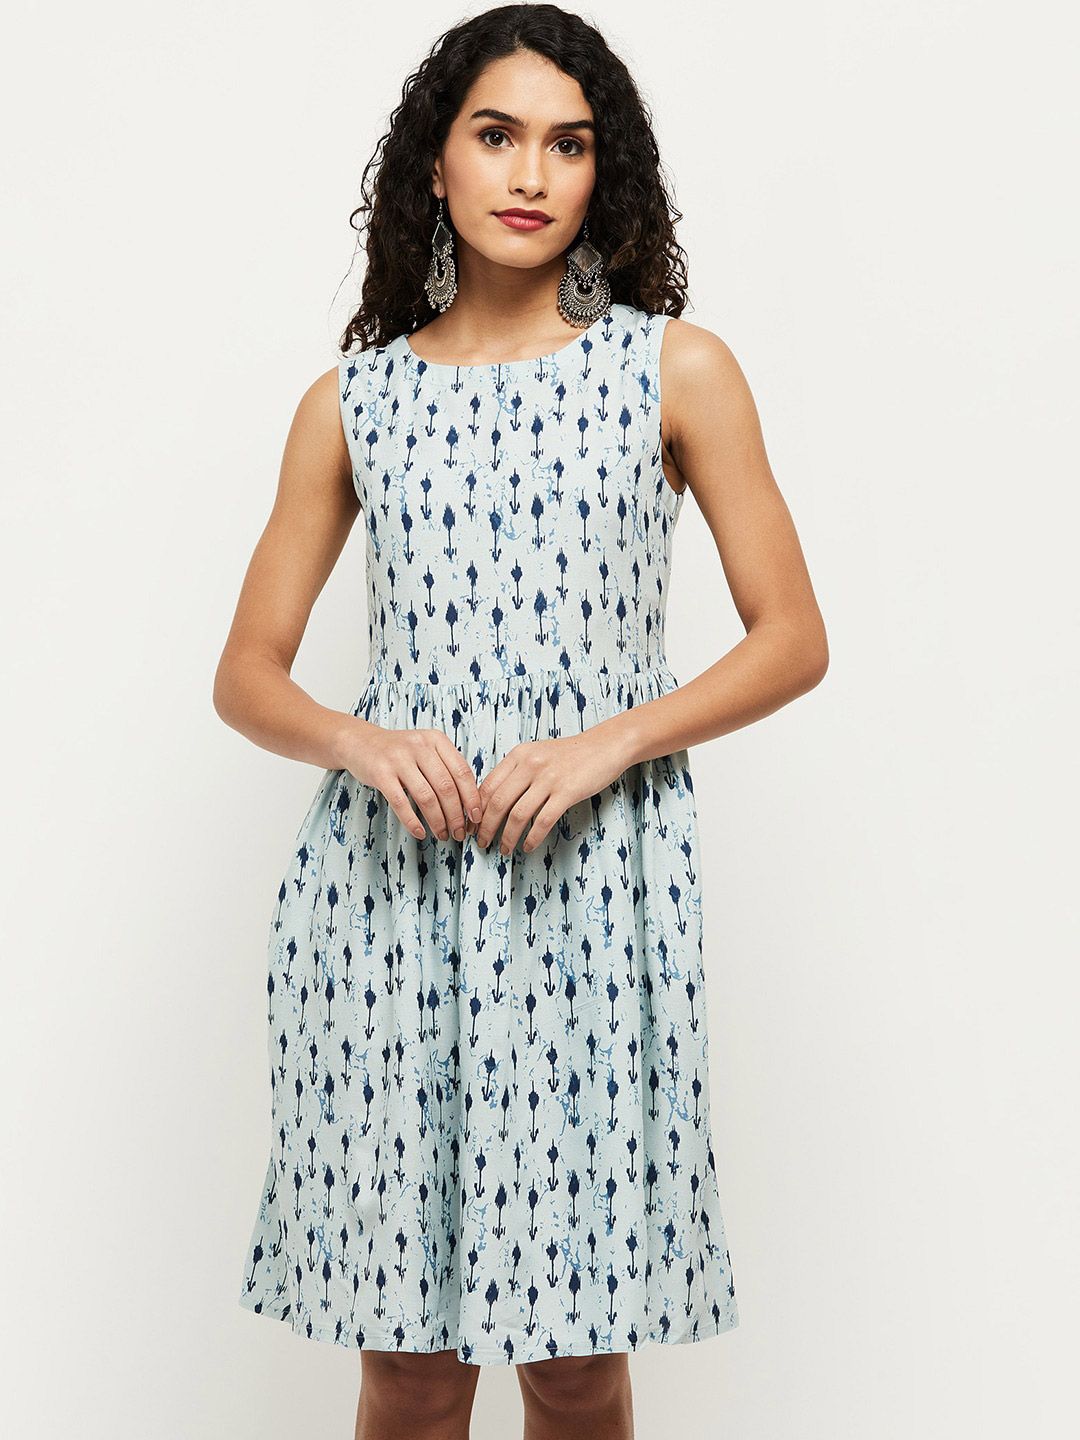 max Blue Dress Price in India